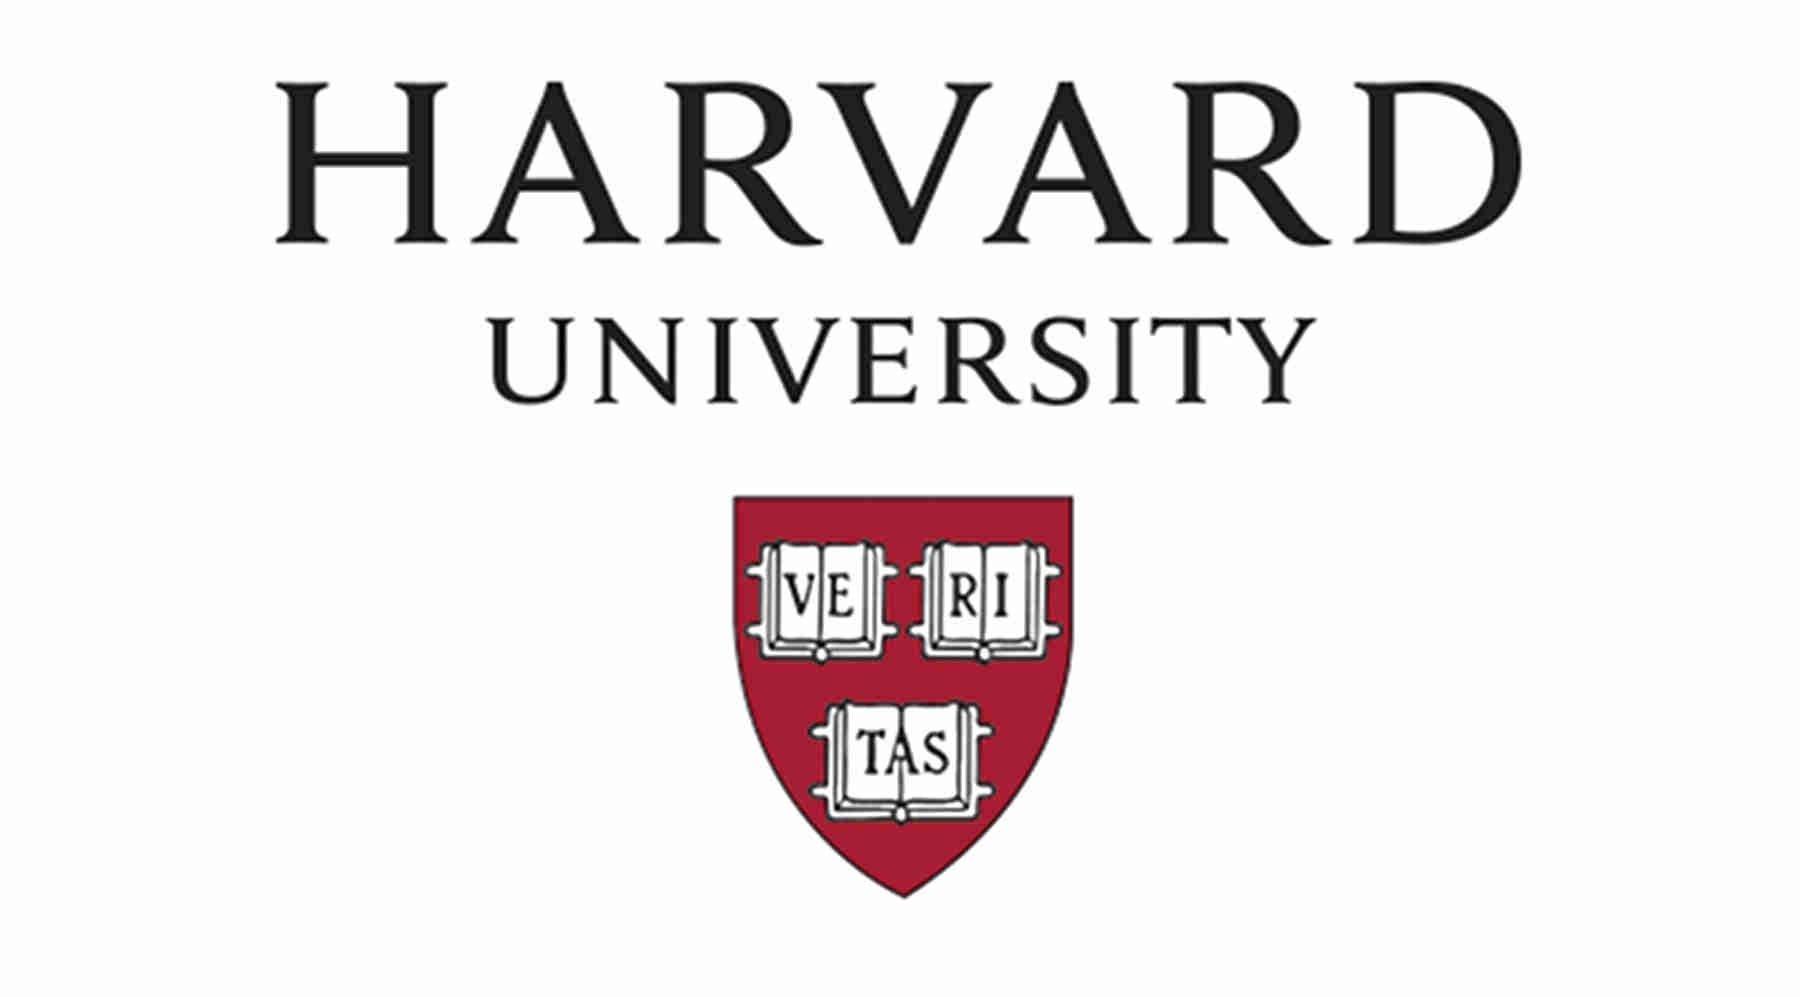 Harvard University Wallpaper